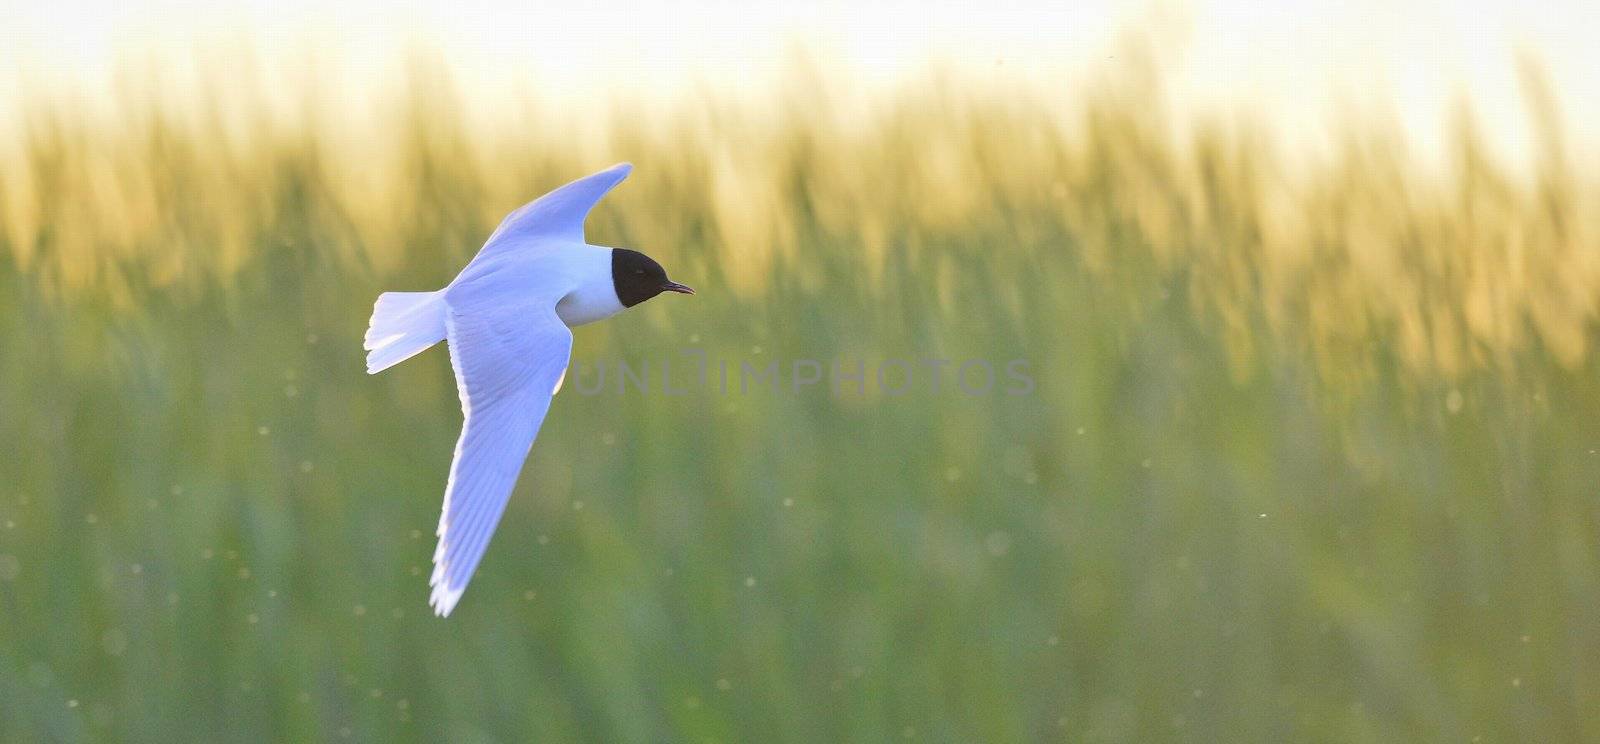 Flying gull by SURZ